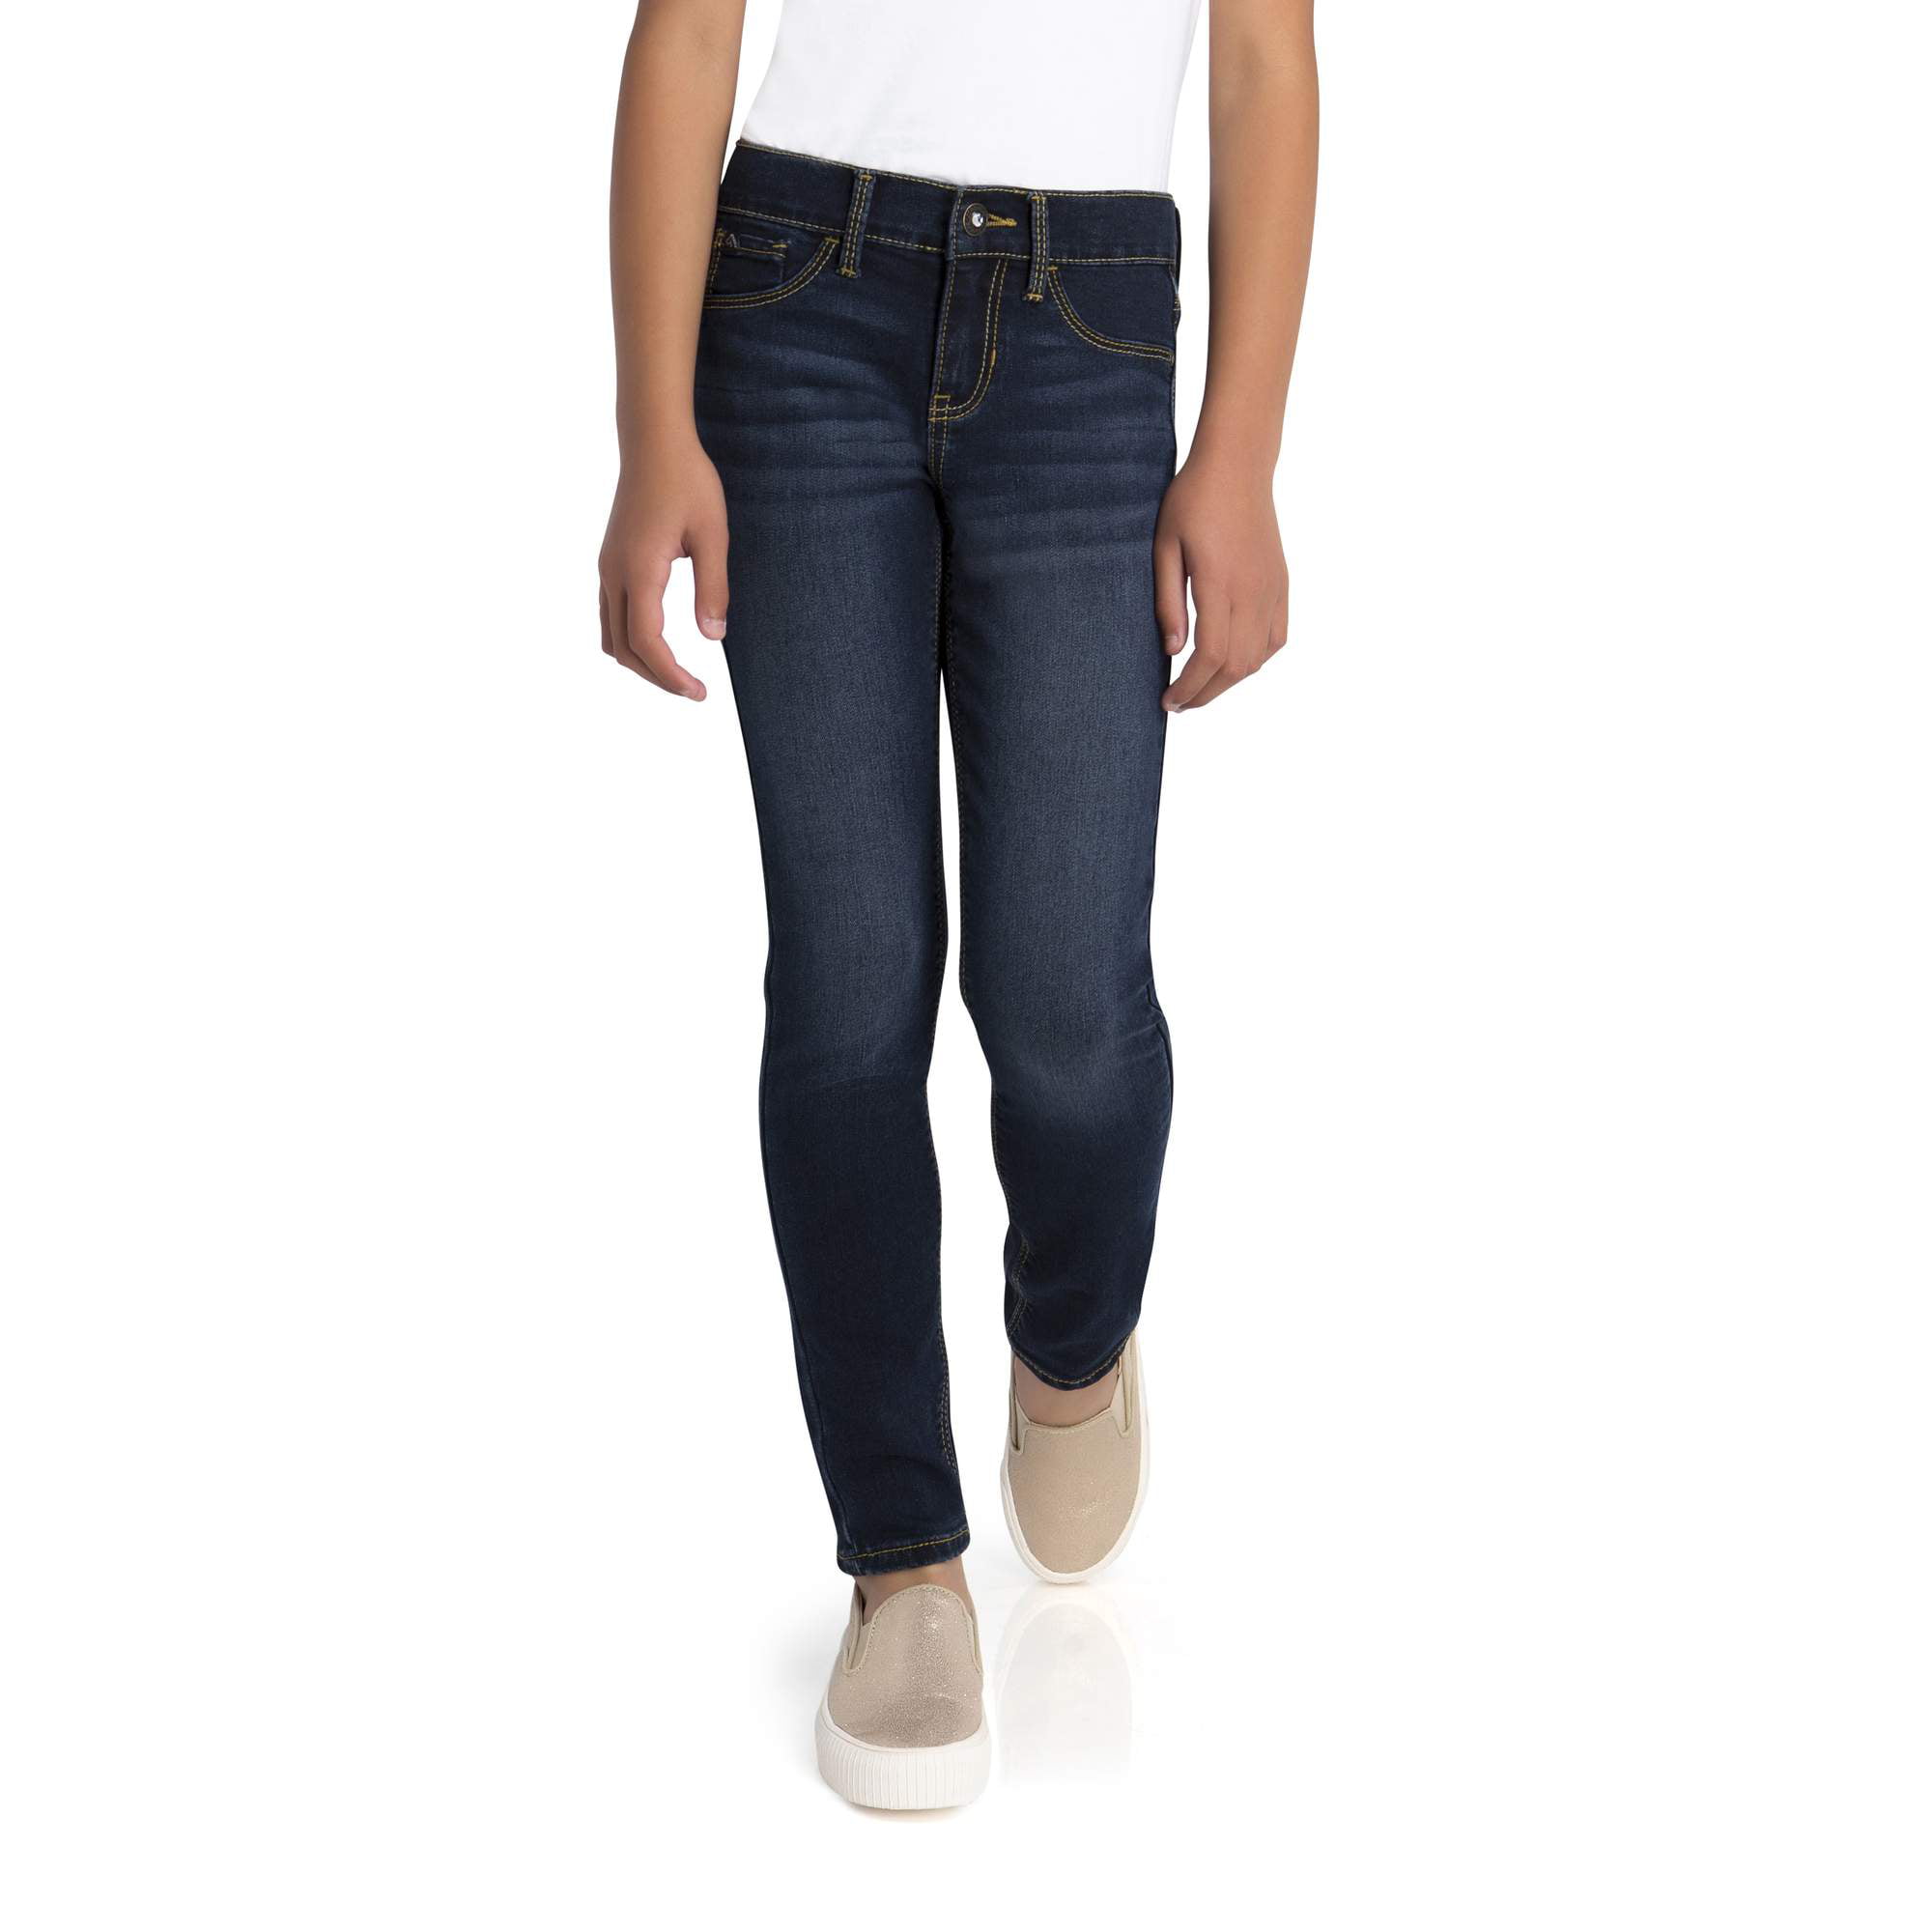 Jordache Girls Super Soft Skinny Premium Jean Pants (Pebblestone)